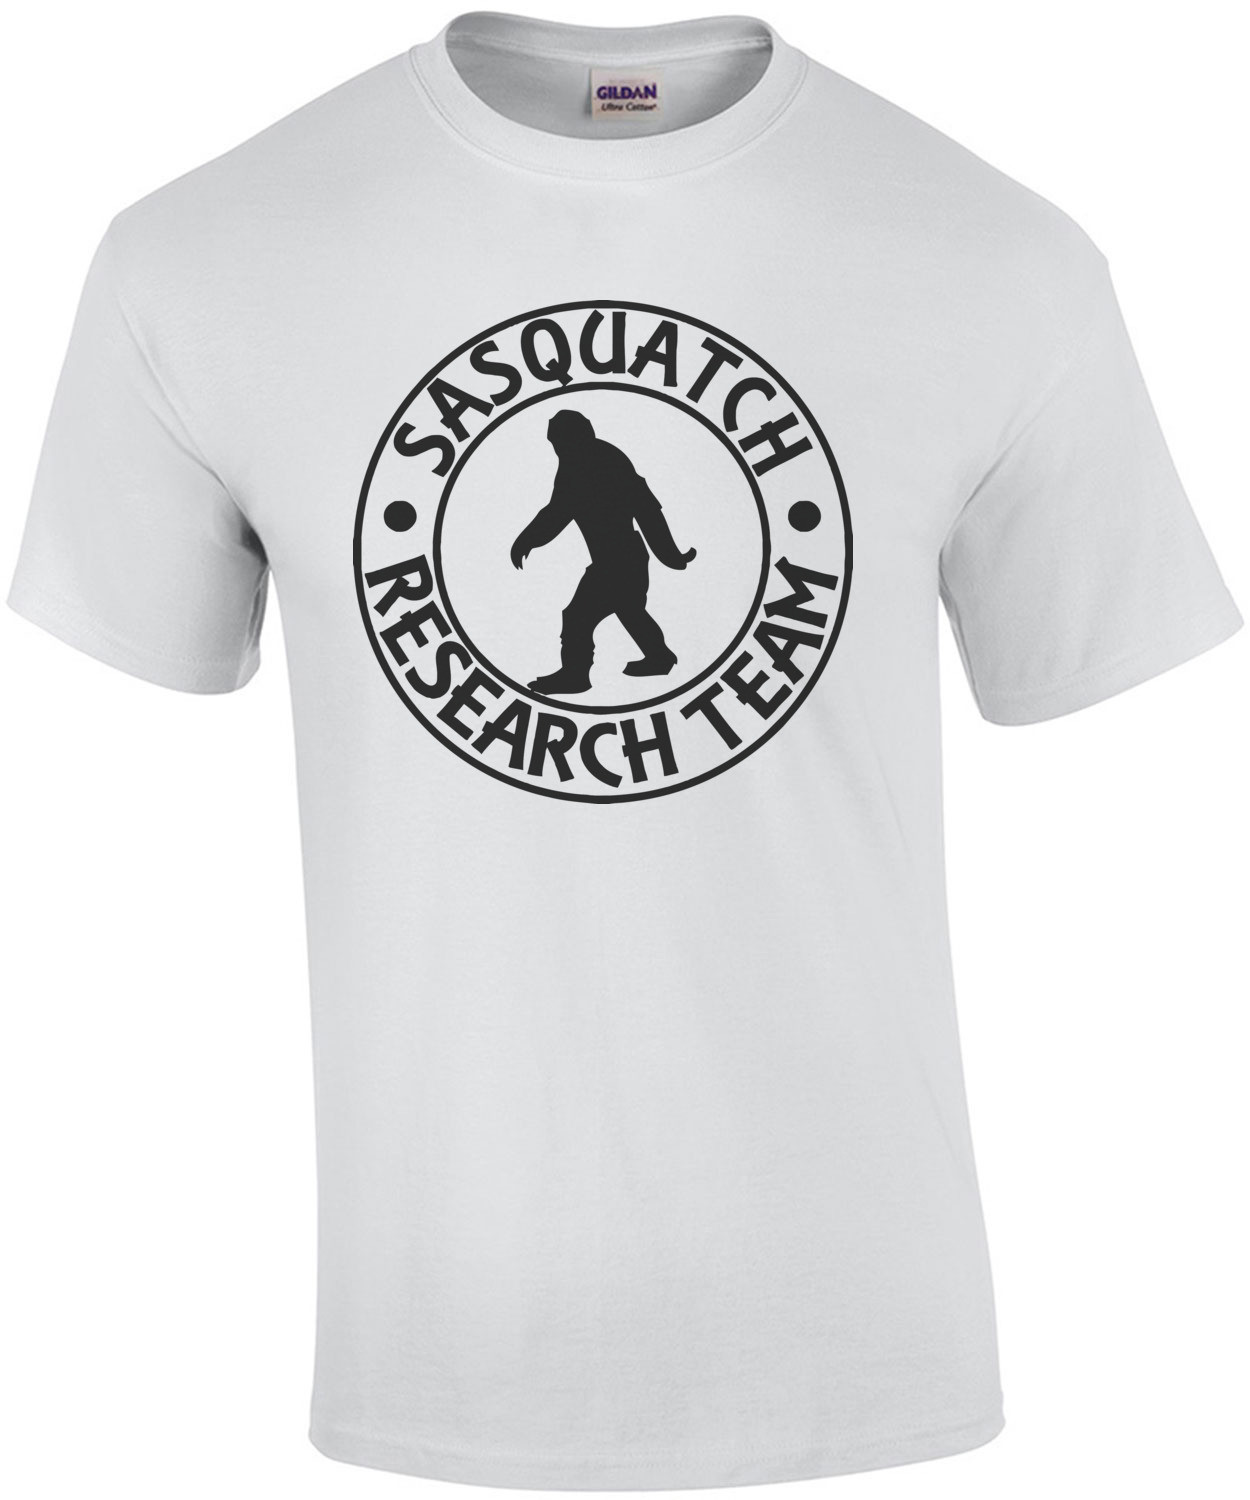 Sasquatch Research Team T-Shirt